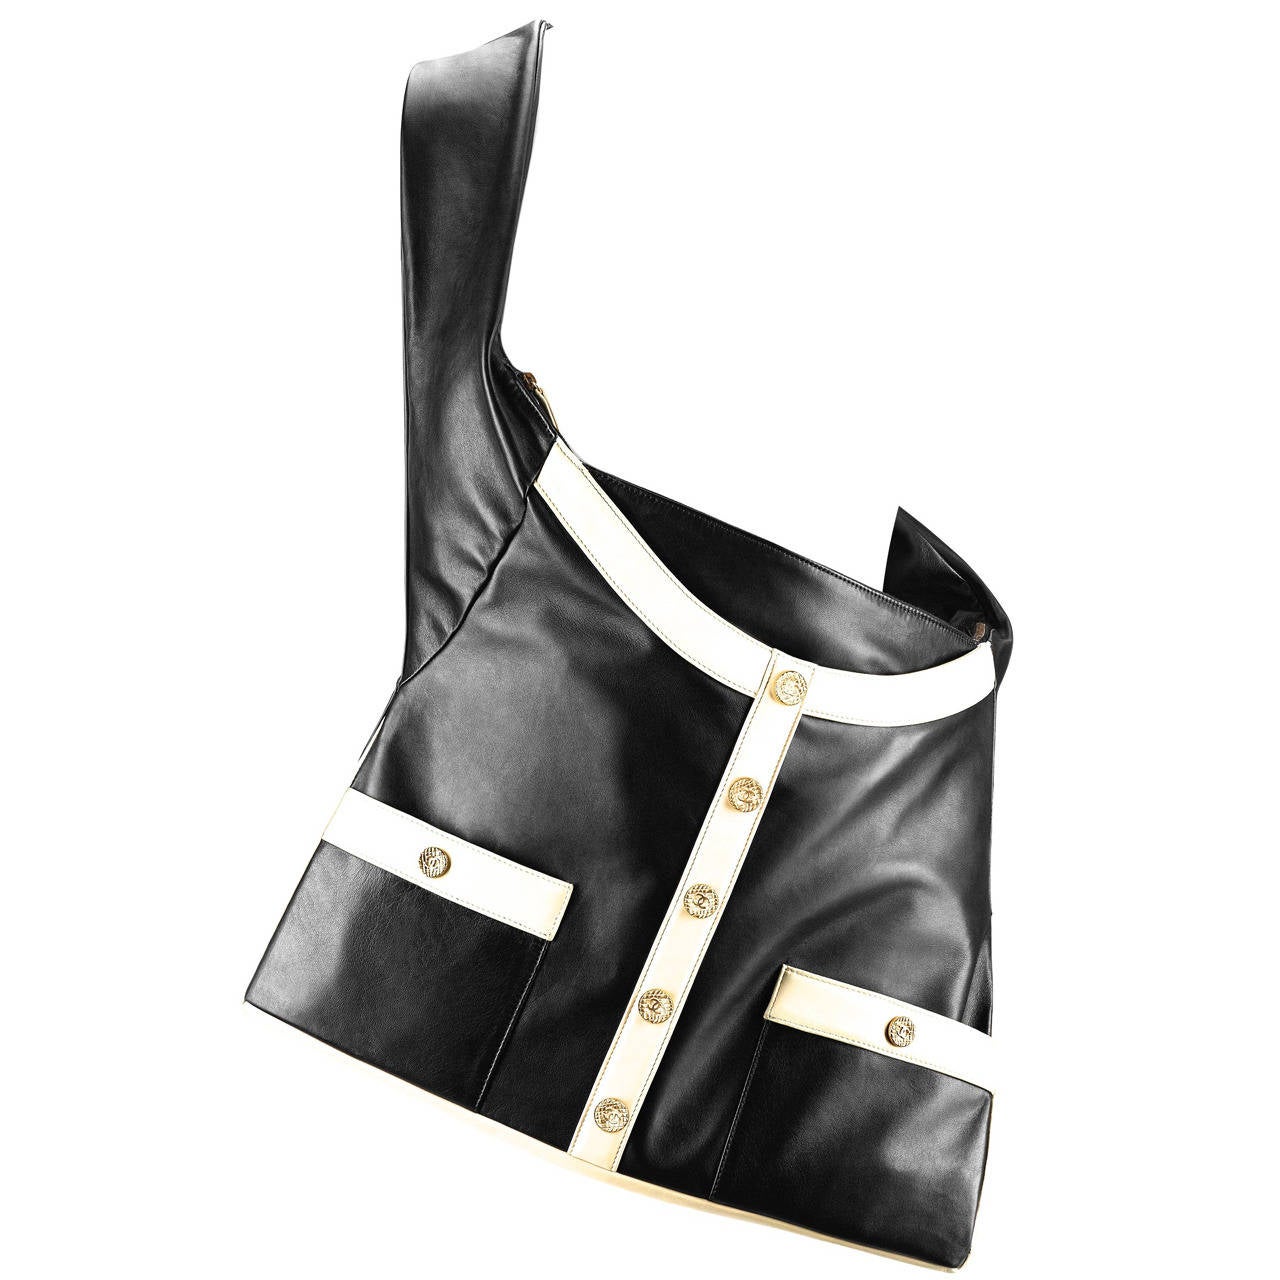 New Girl CHANEL Girl Bag - Black Lambskin Leather - Rare